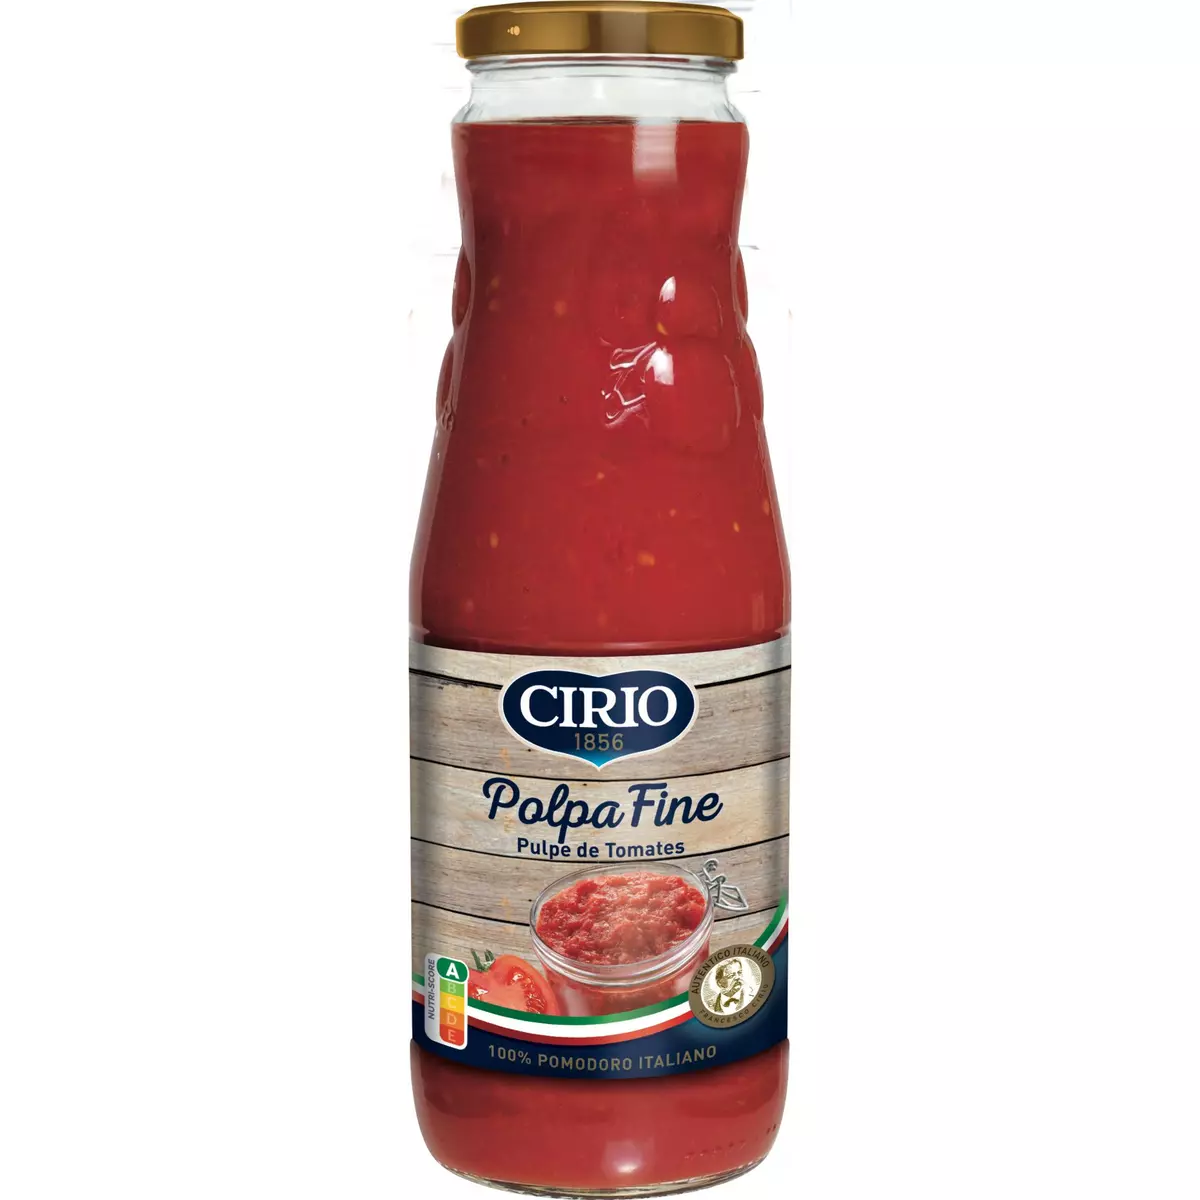 CIRIO Pulpe fine de tomates italiennes en bouteille 680g